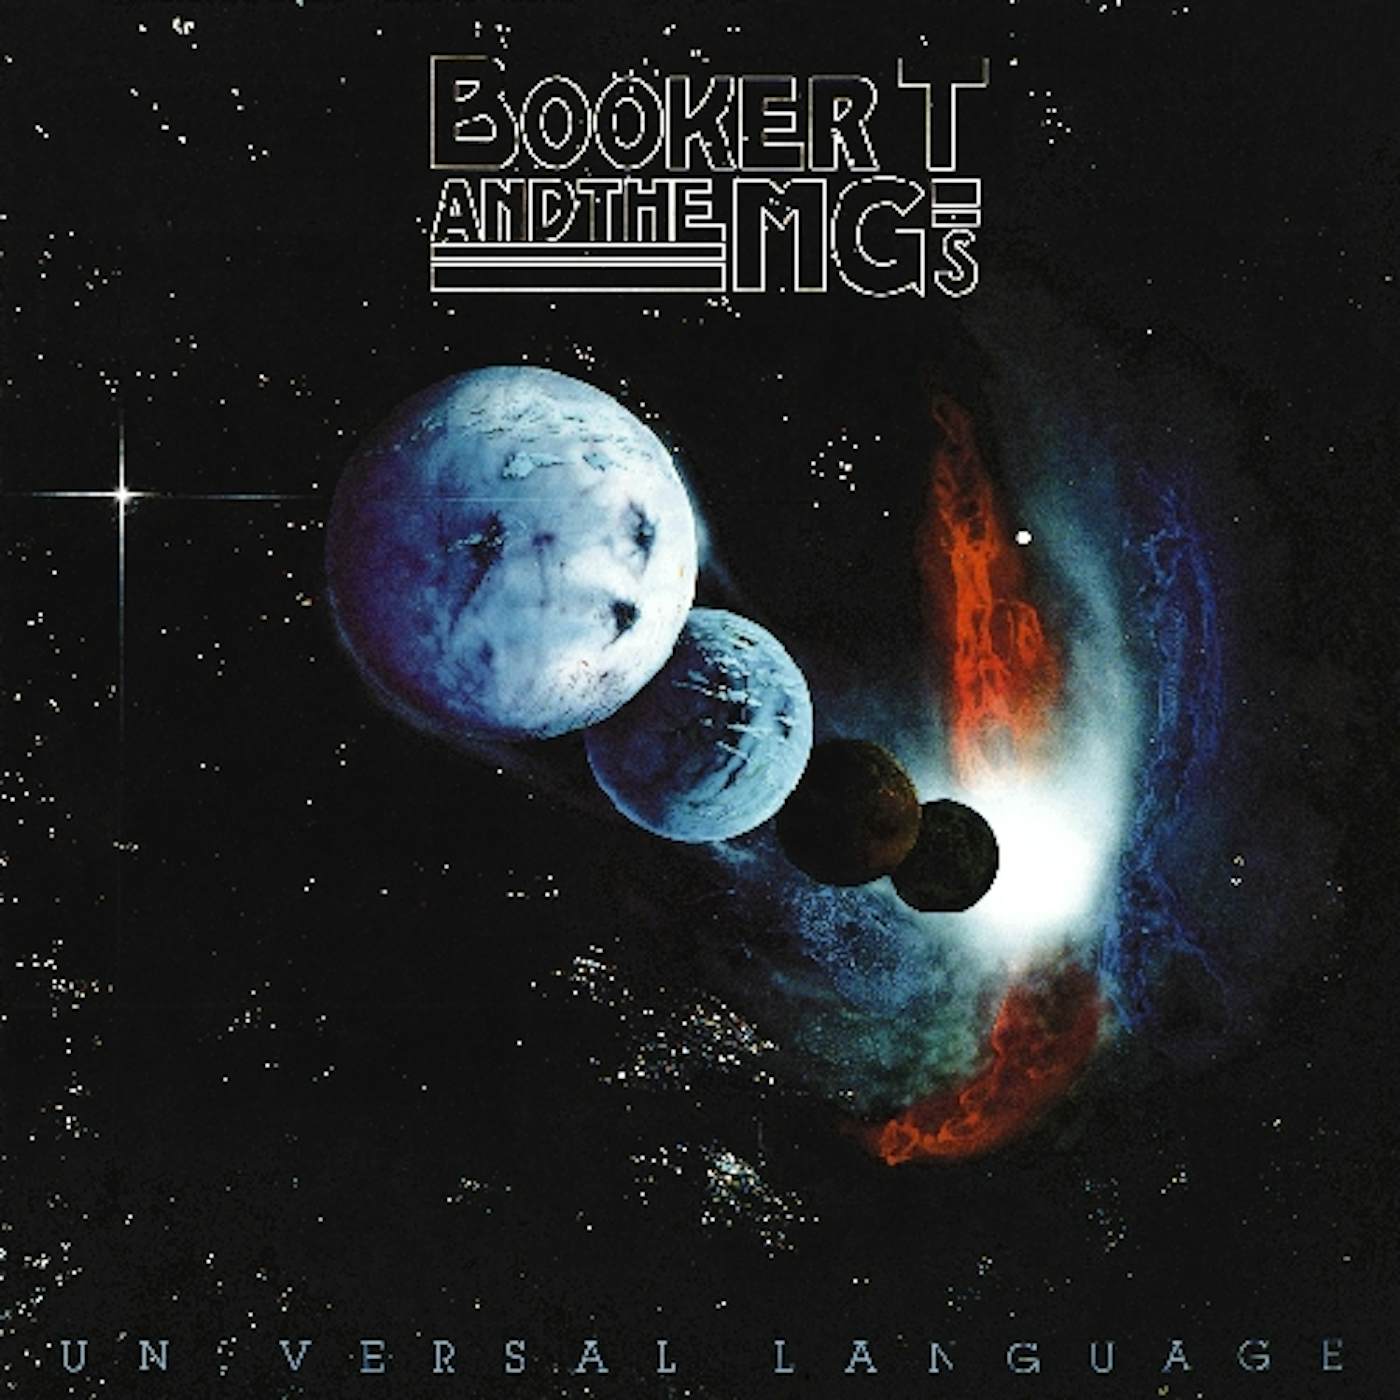 Booker T. & the M.G.'s UNIVERSAL LANGUAGE CD